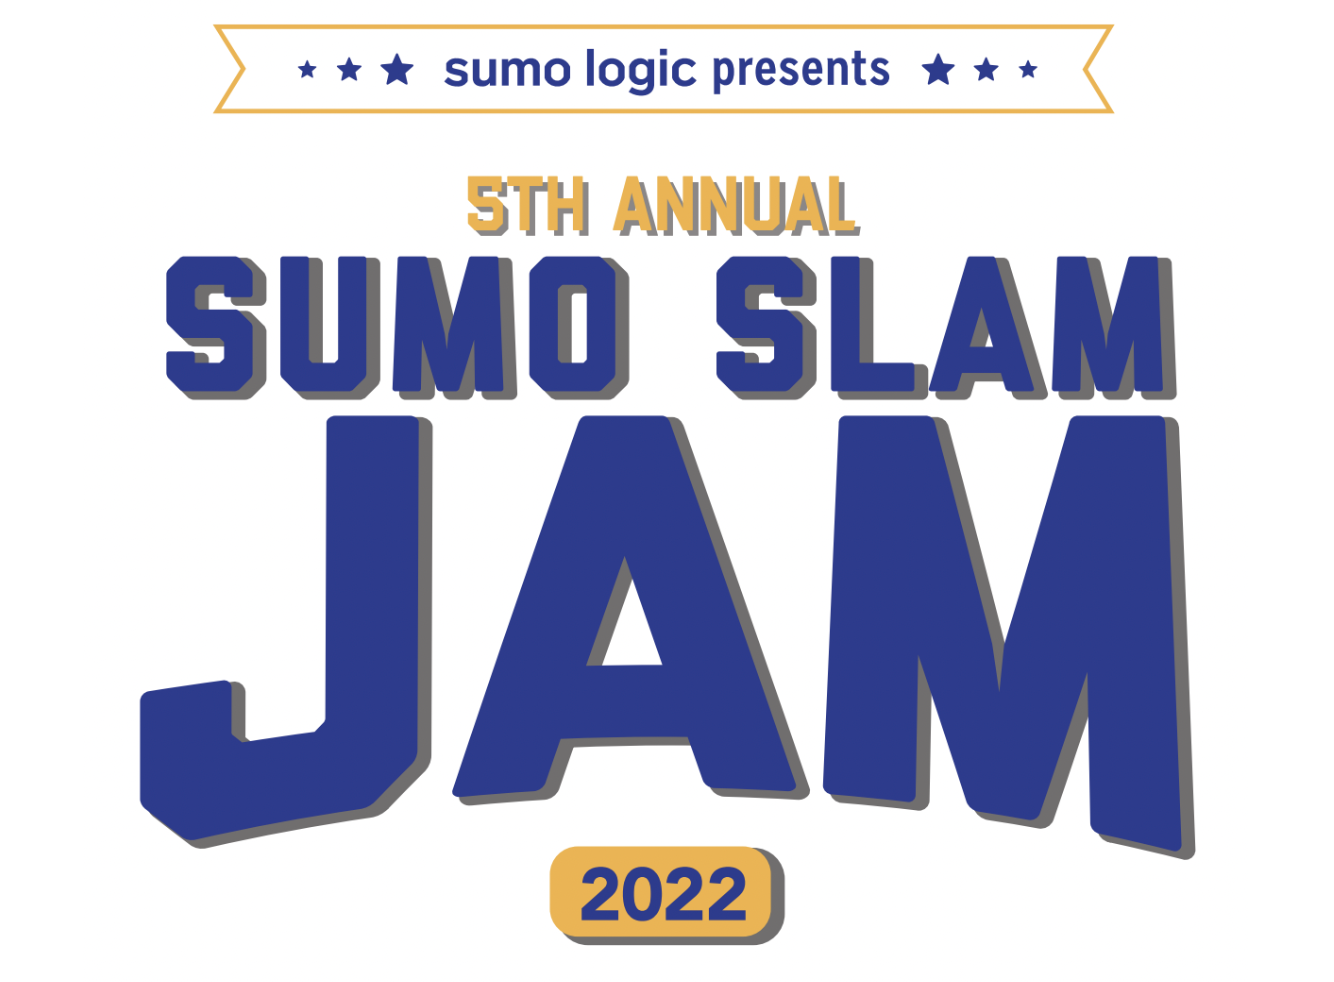 Static promotional image for Sumo Slam Jam